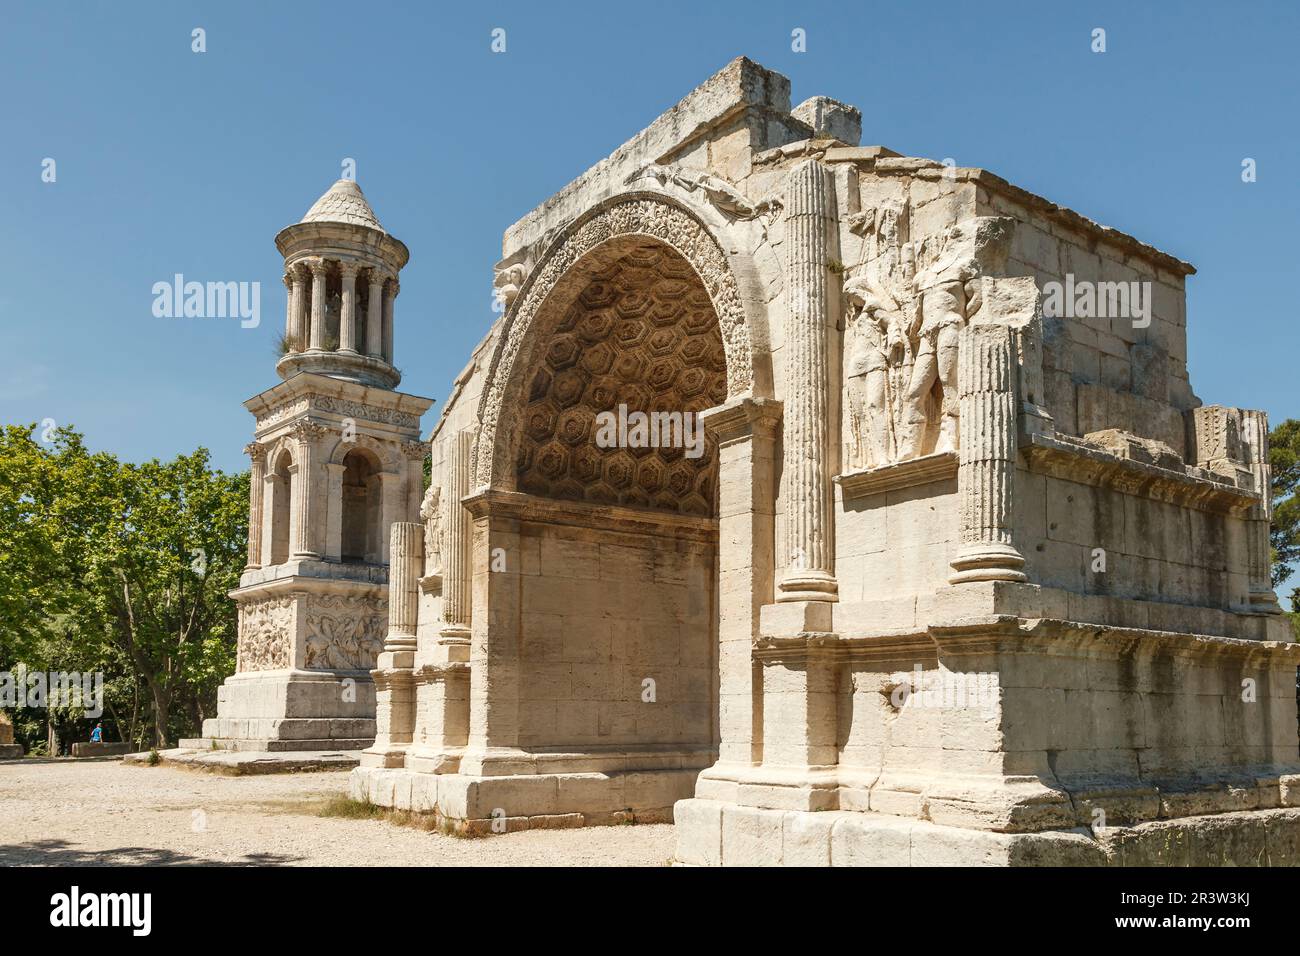 Saint-RÃ-de-Provence, Les Antiques, Glanum, Julier Mausoleo e Arco di Trionfo, Provenza, Francia meridionale Foto Stock